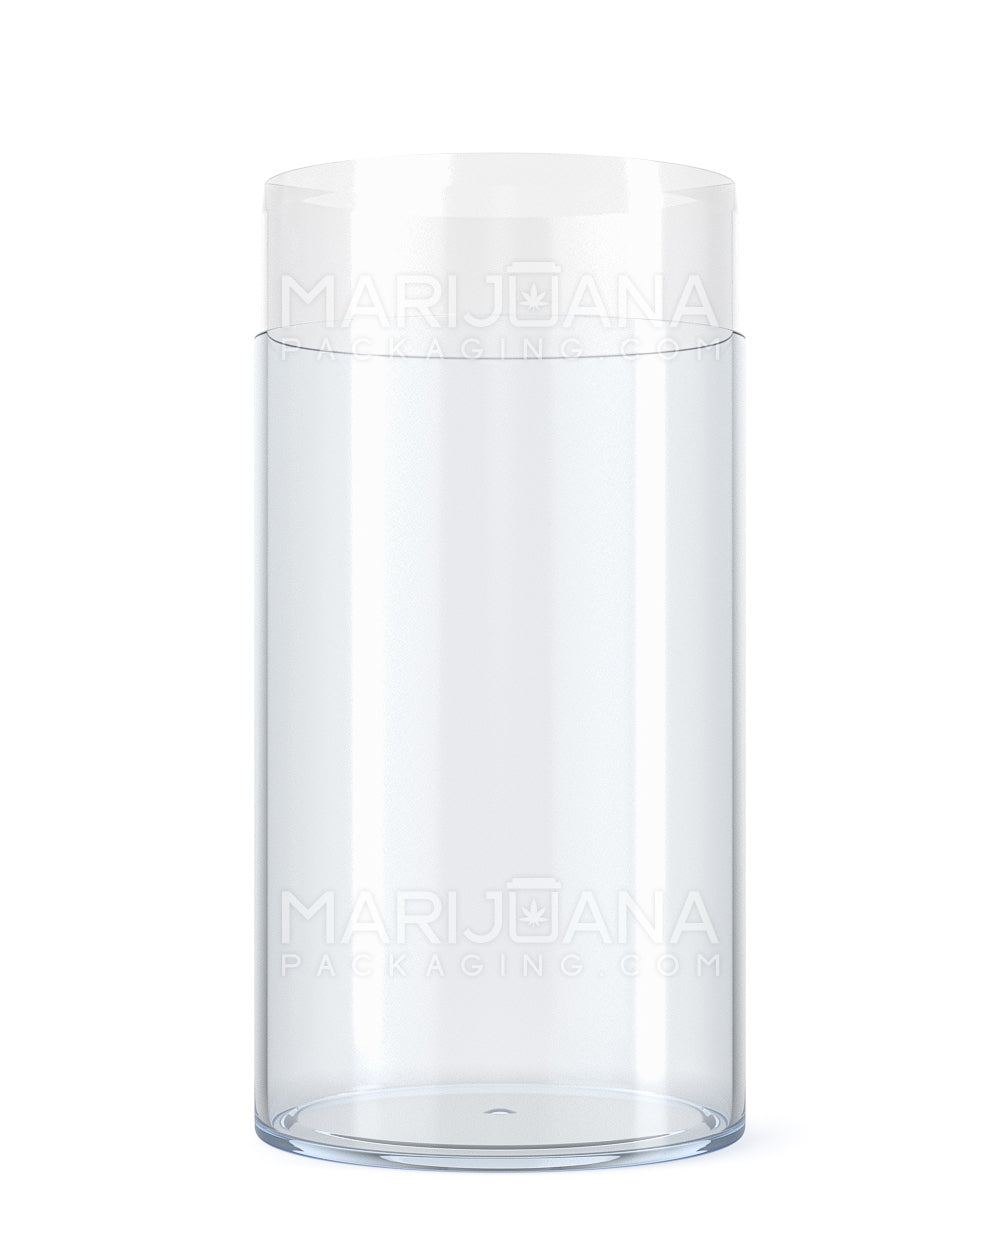 Press Button Plastic Airtight Container | 5oz - 142g - Large - 3